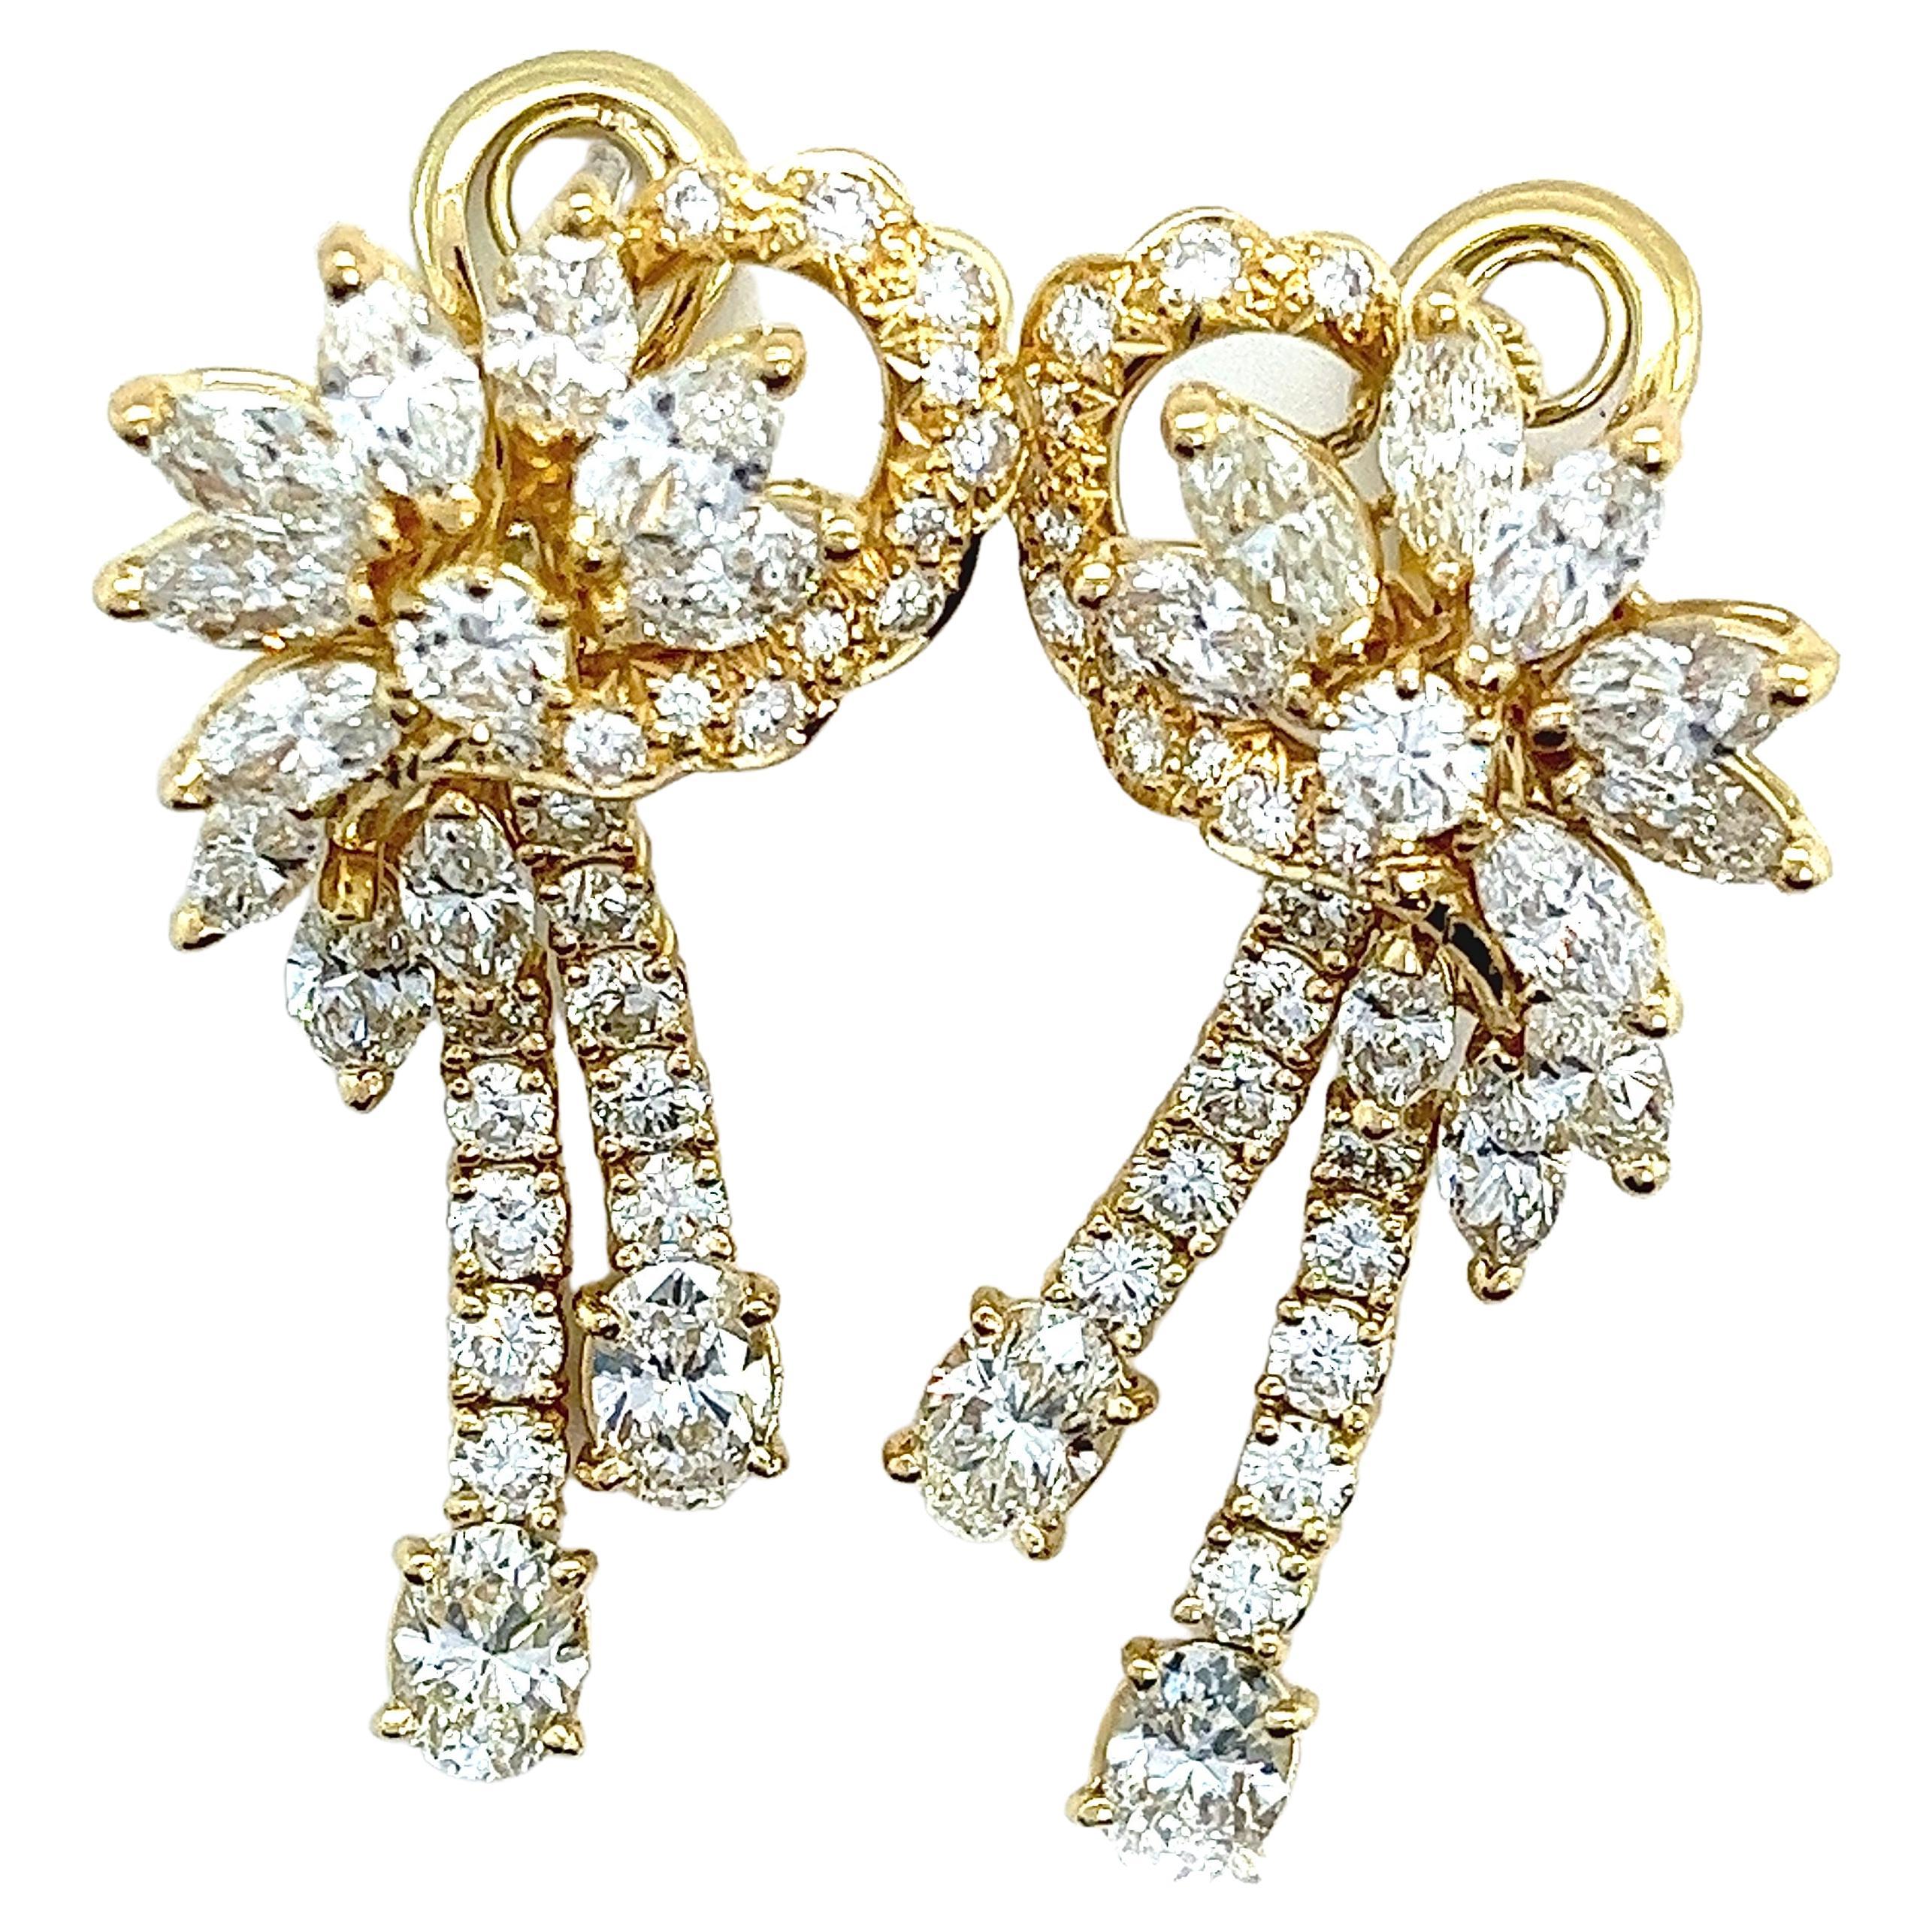 Vintage 11.75 Carats Diamond Cluster Dangle Earring, Circa 1980's, 18K